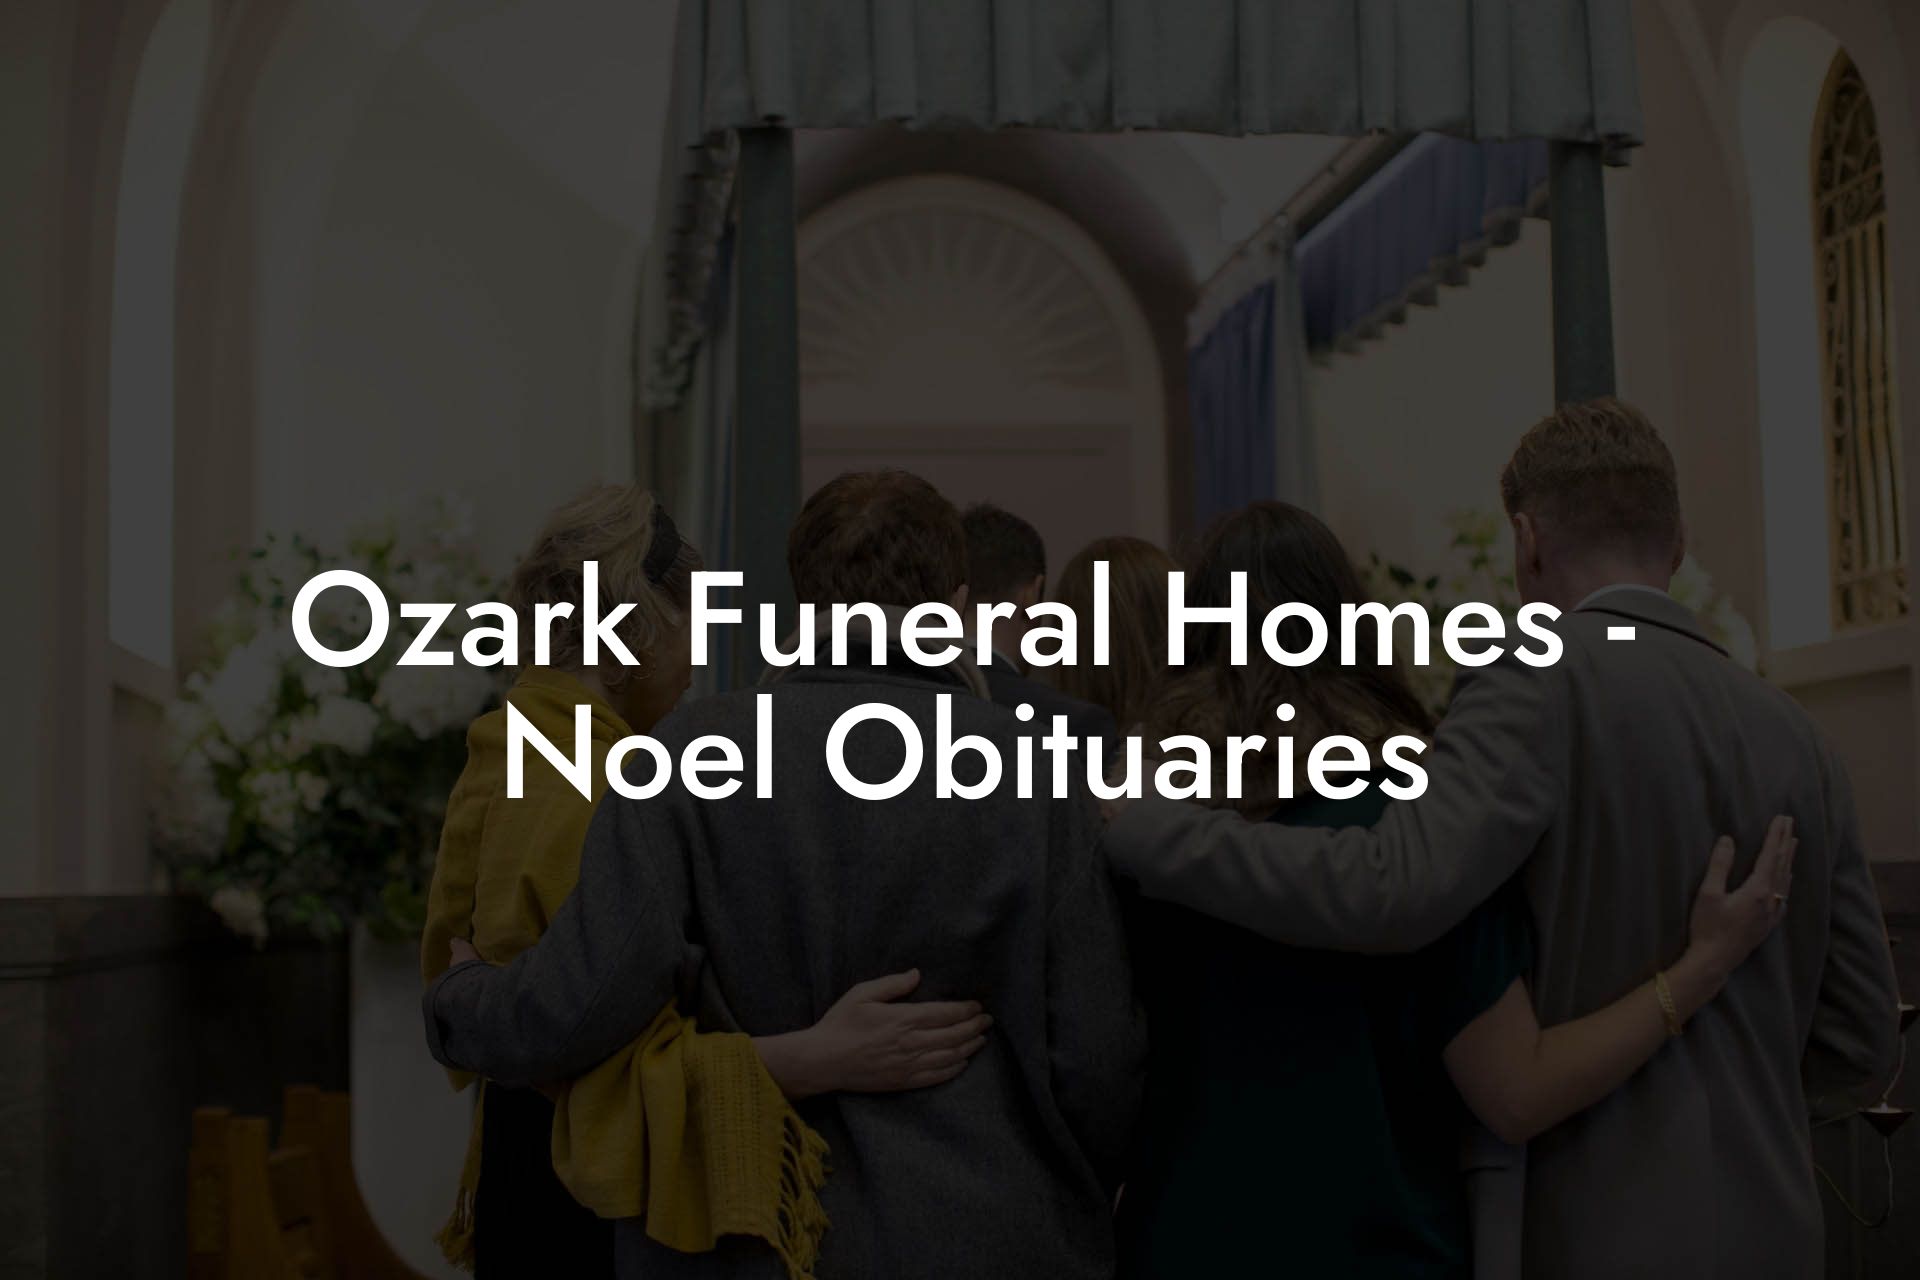 Ozark Funeral Homes - Noel Obituaries